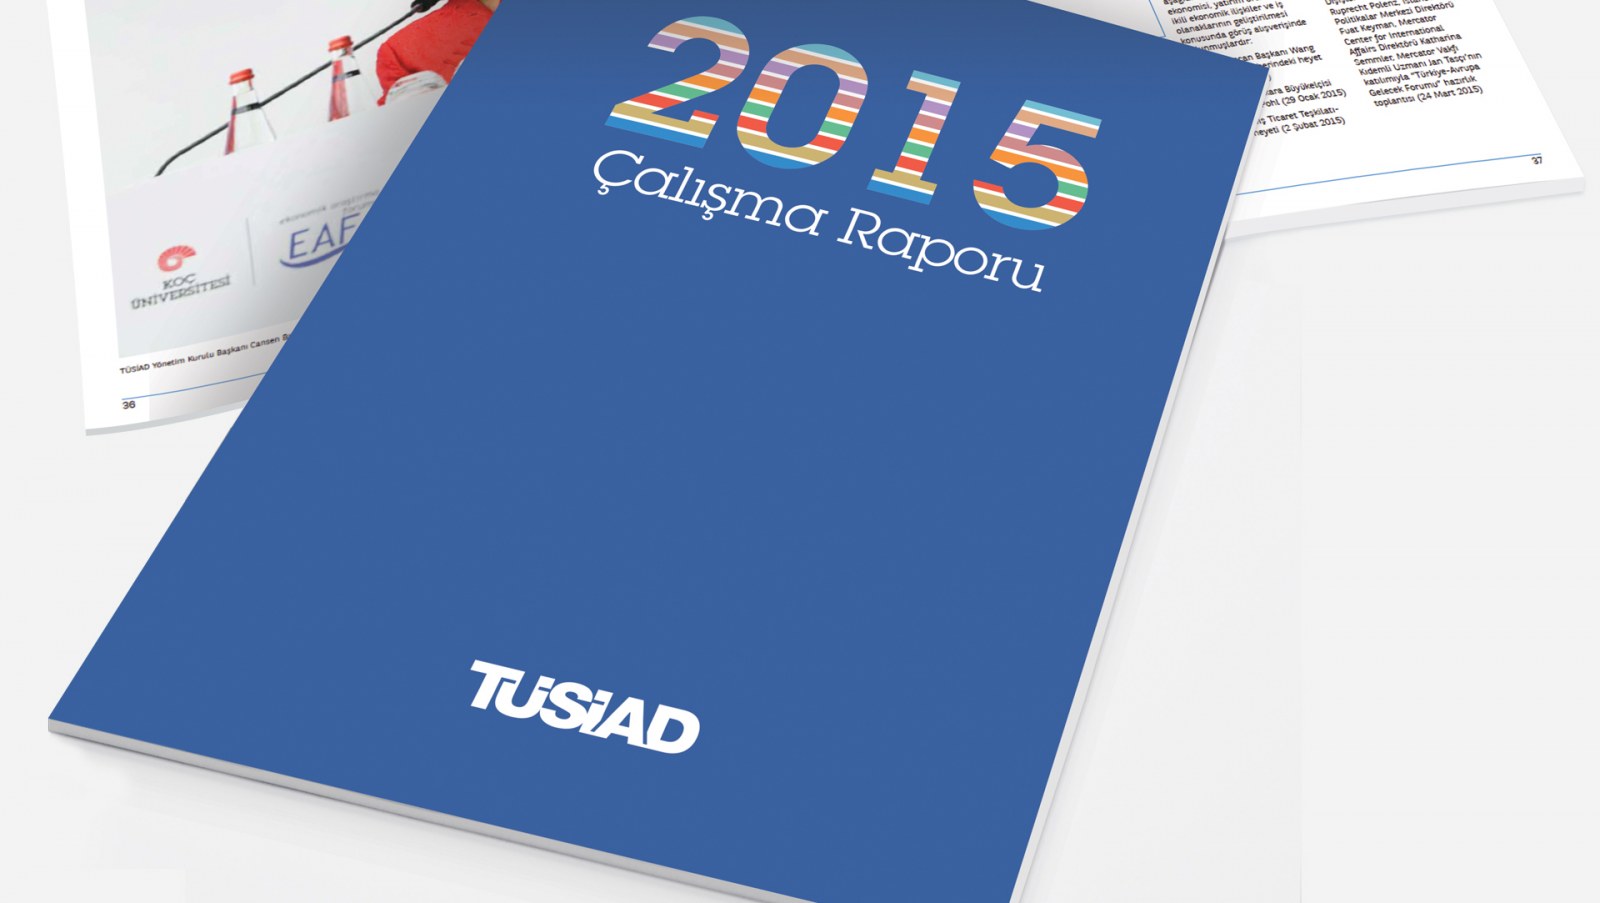 TÜSİAD / 2015 Faaliyet Raporu / 2015 Annual Report